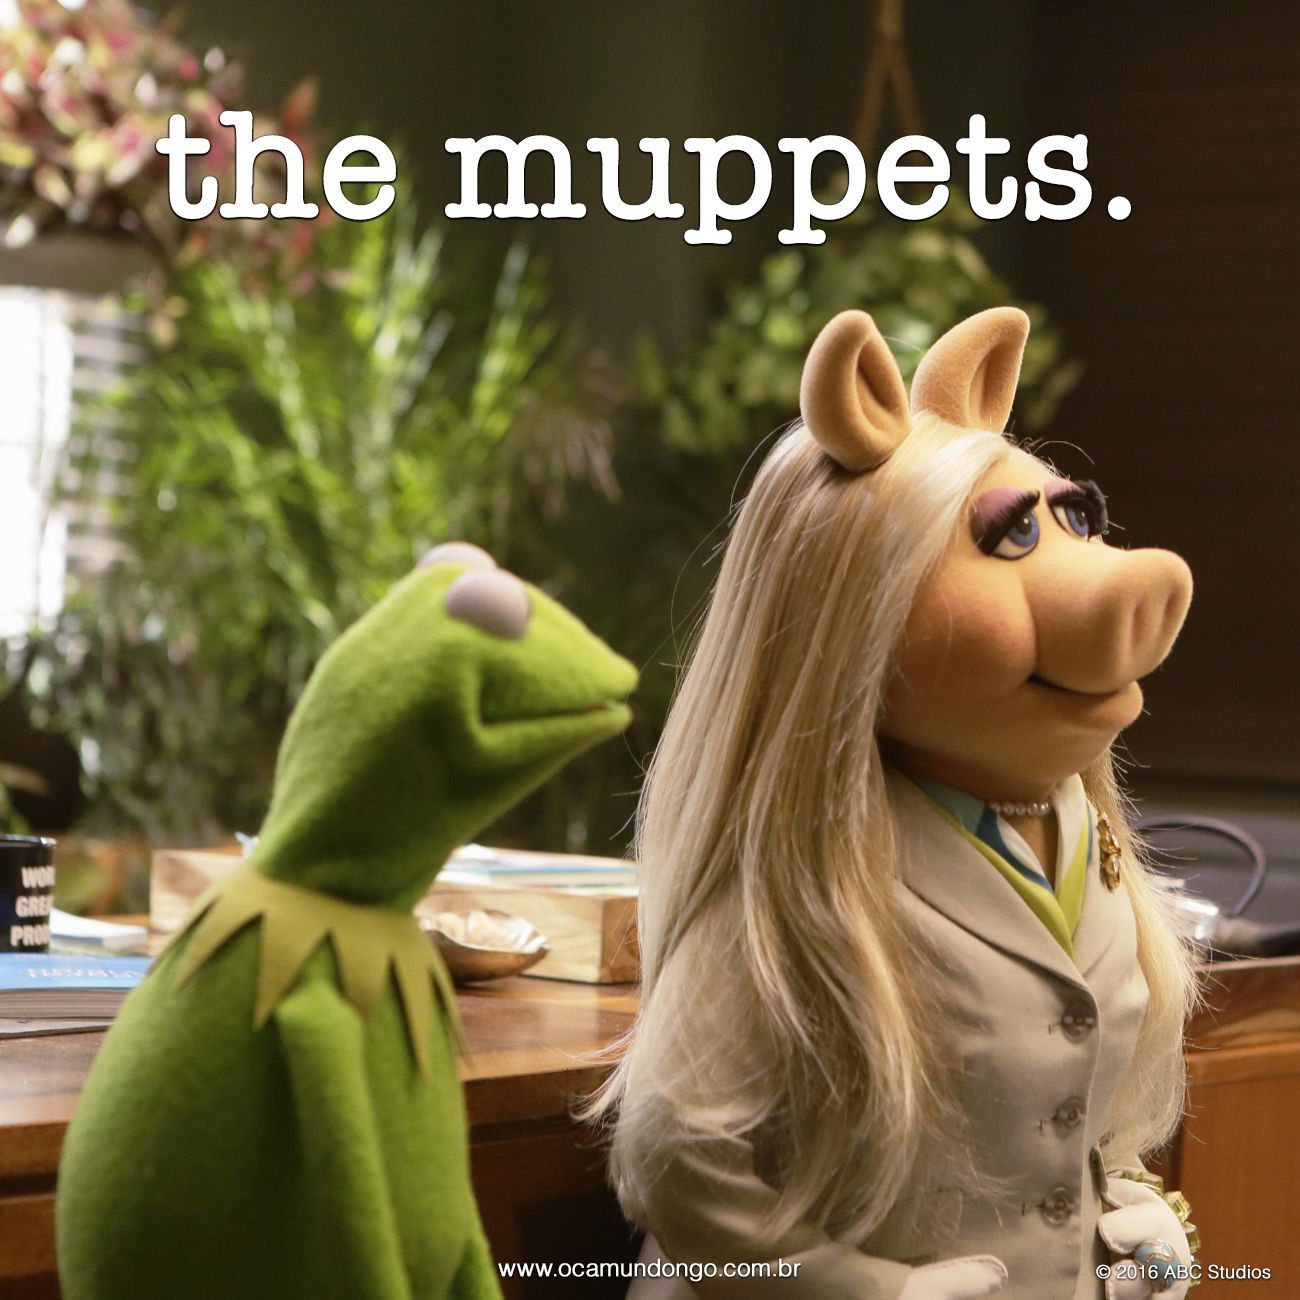 the-muppets-swine-inicio-camundongo